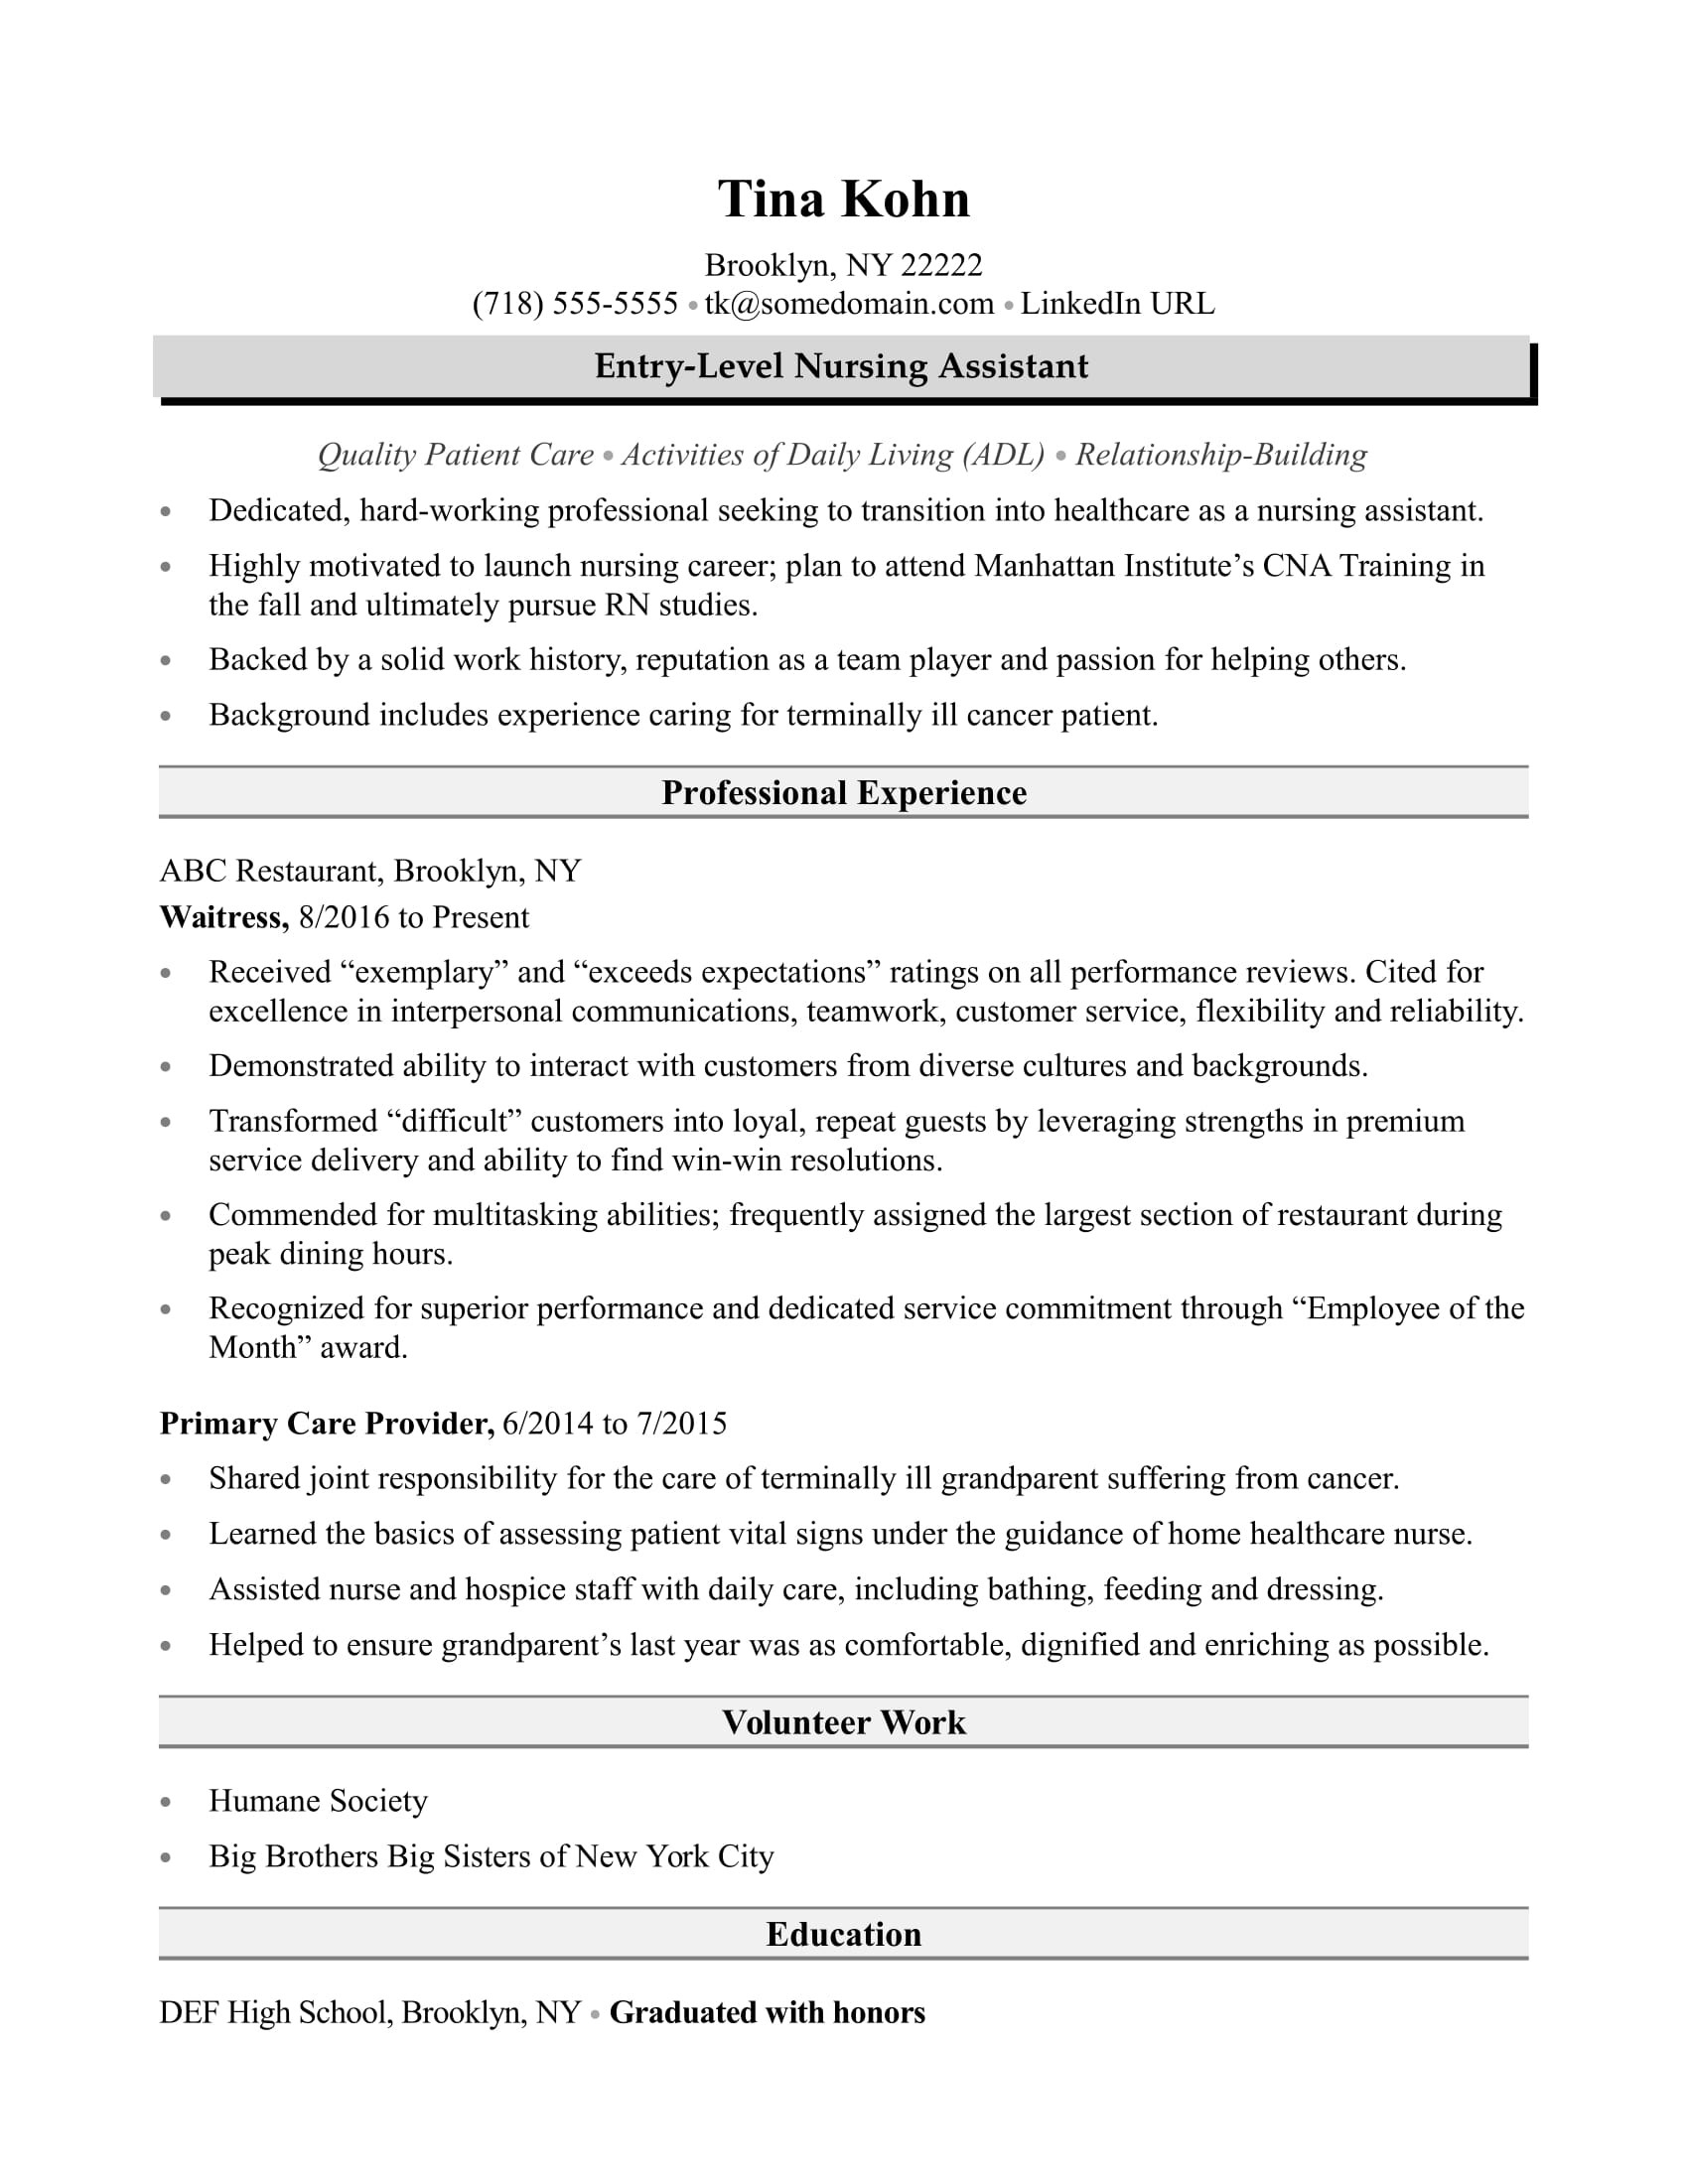 Sample Resume for Entry Level Nurses Nursing assistant Resume Sample Monster.com